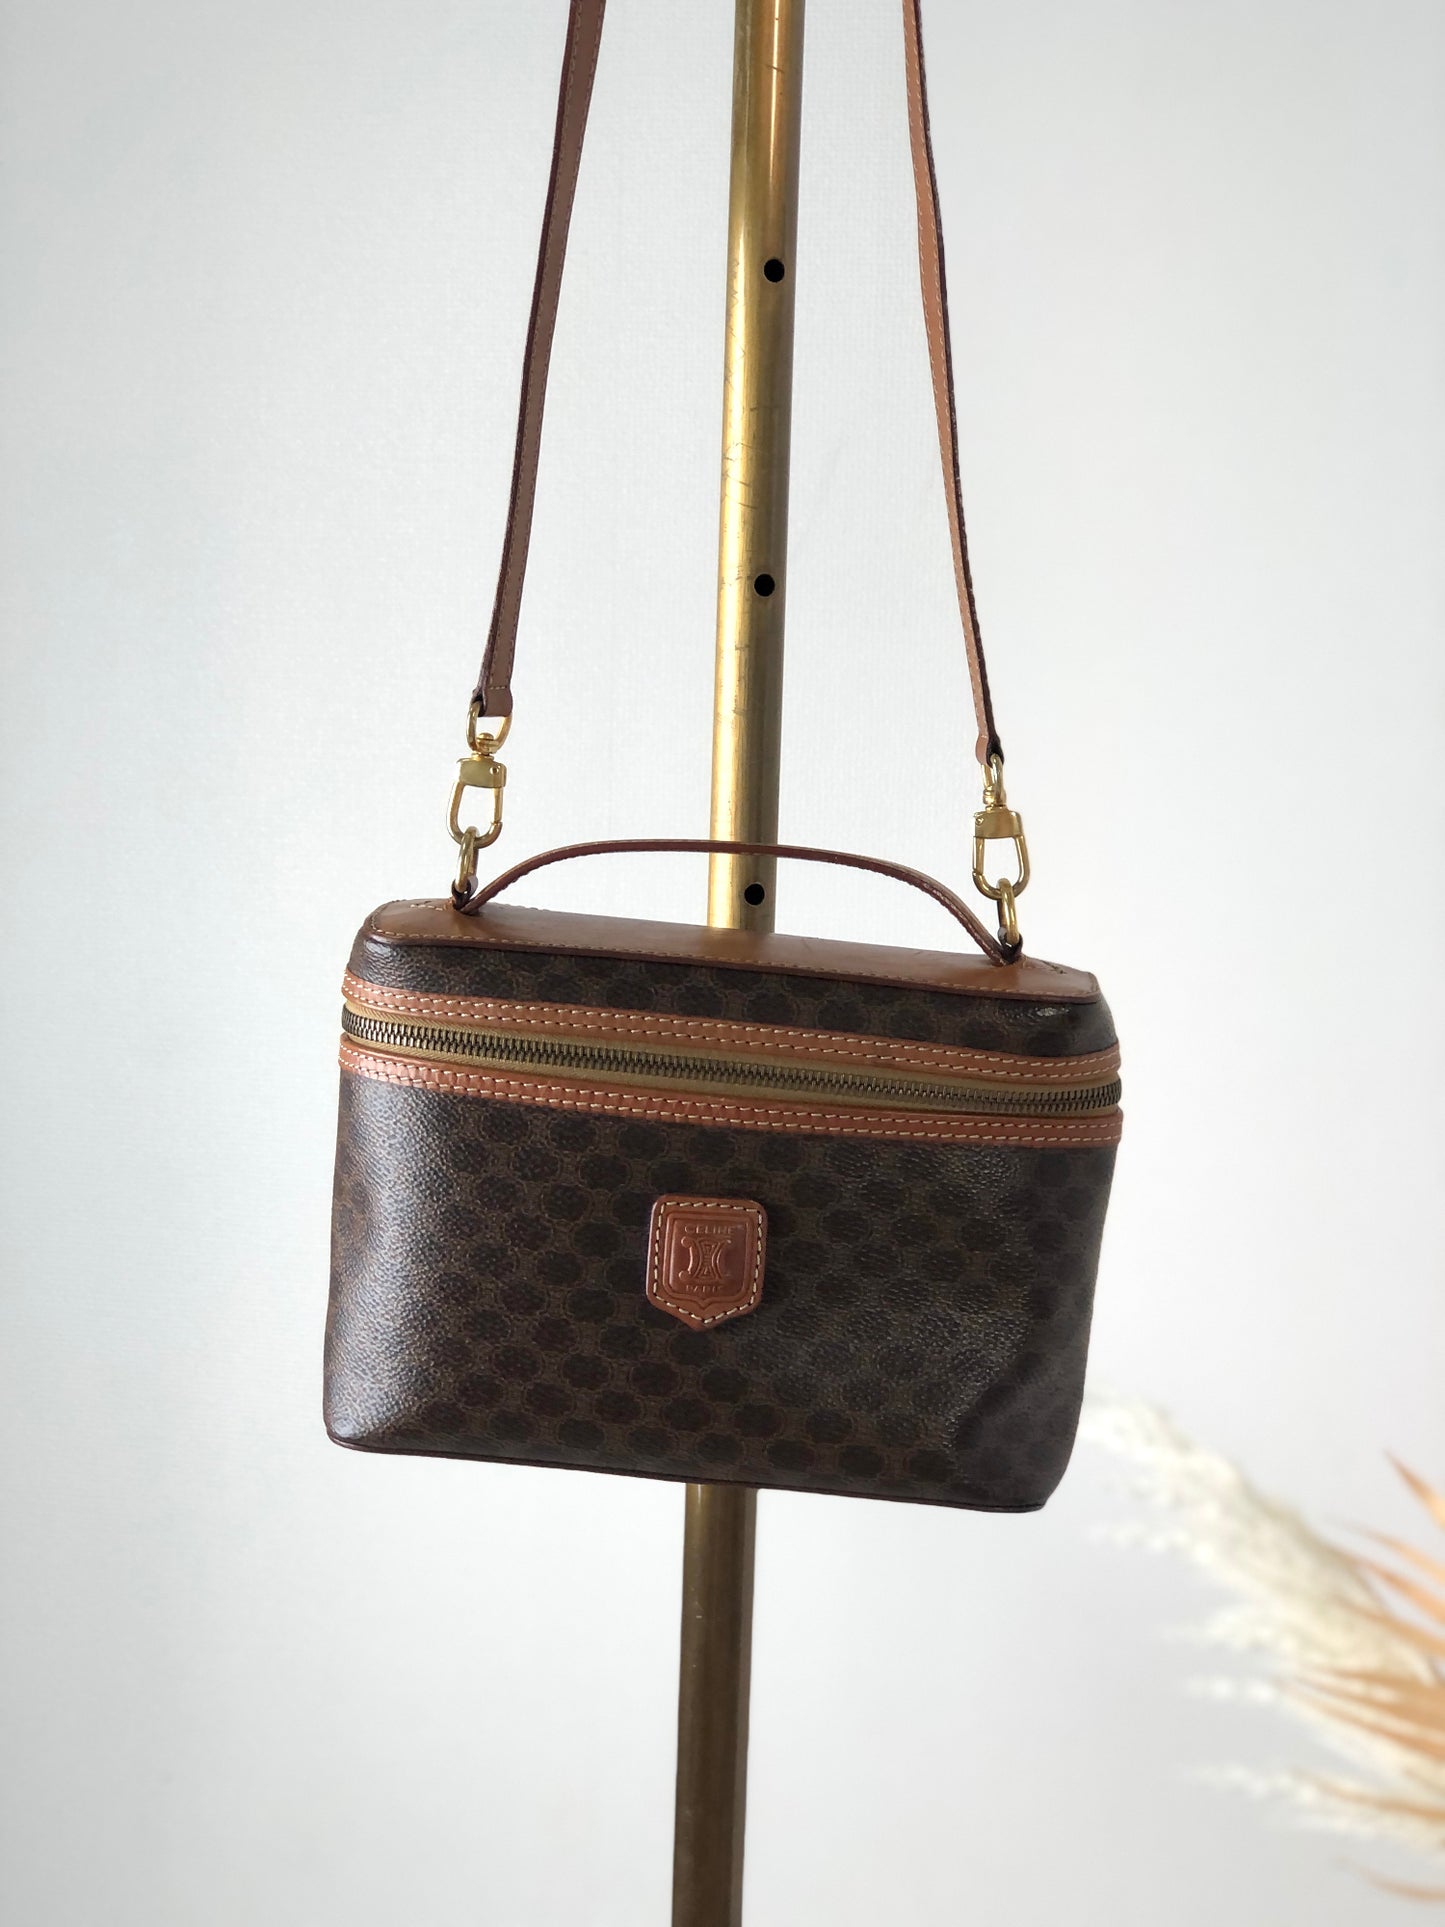 CELINE Macadam Blason  PVC Leather Two-way Shoulder bag Vanity bag Brown Vintage 4v8ygf